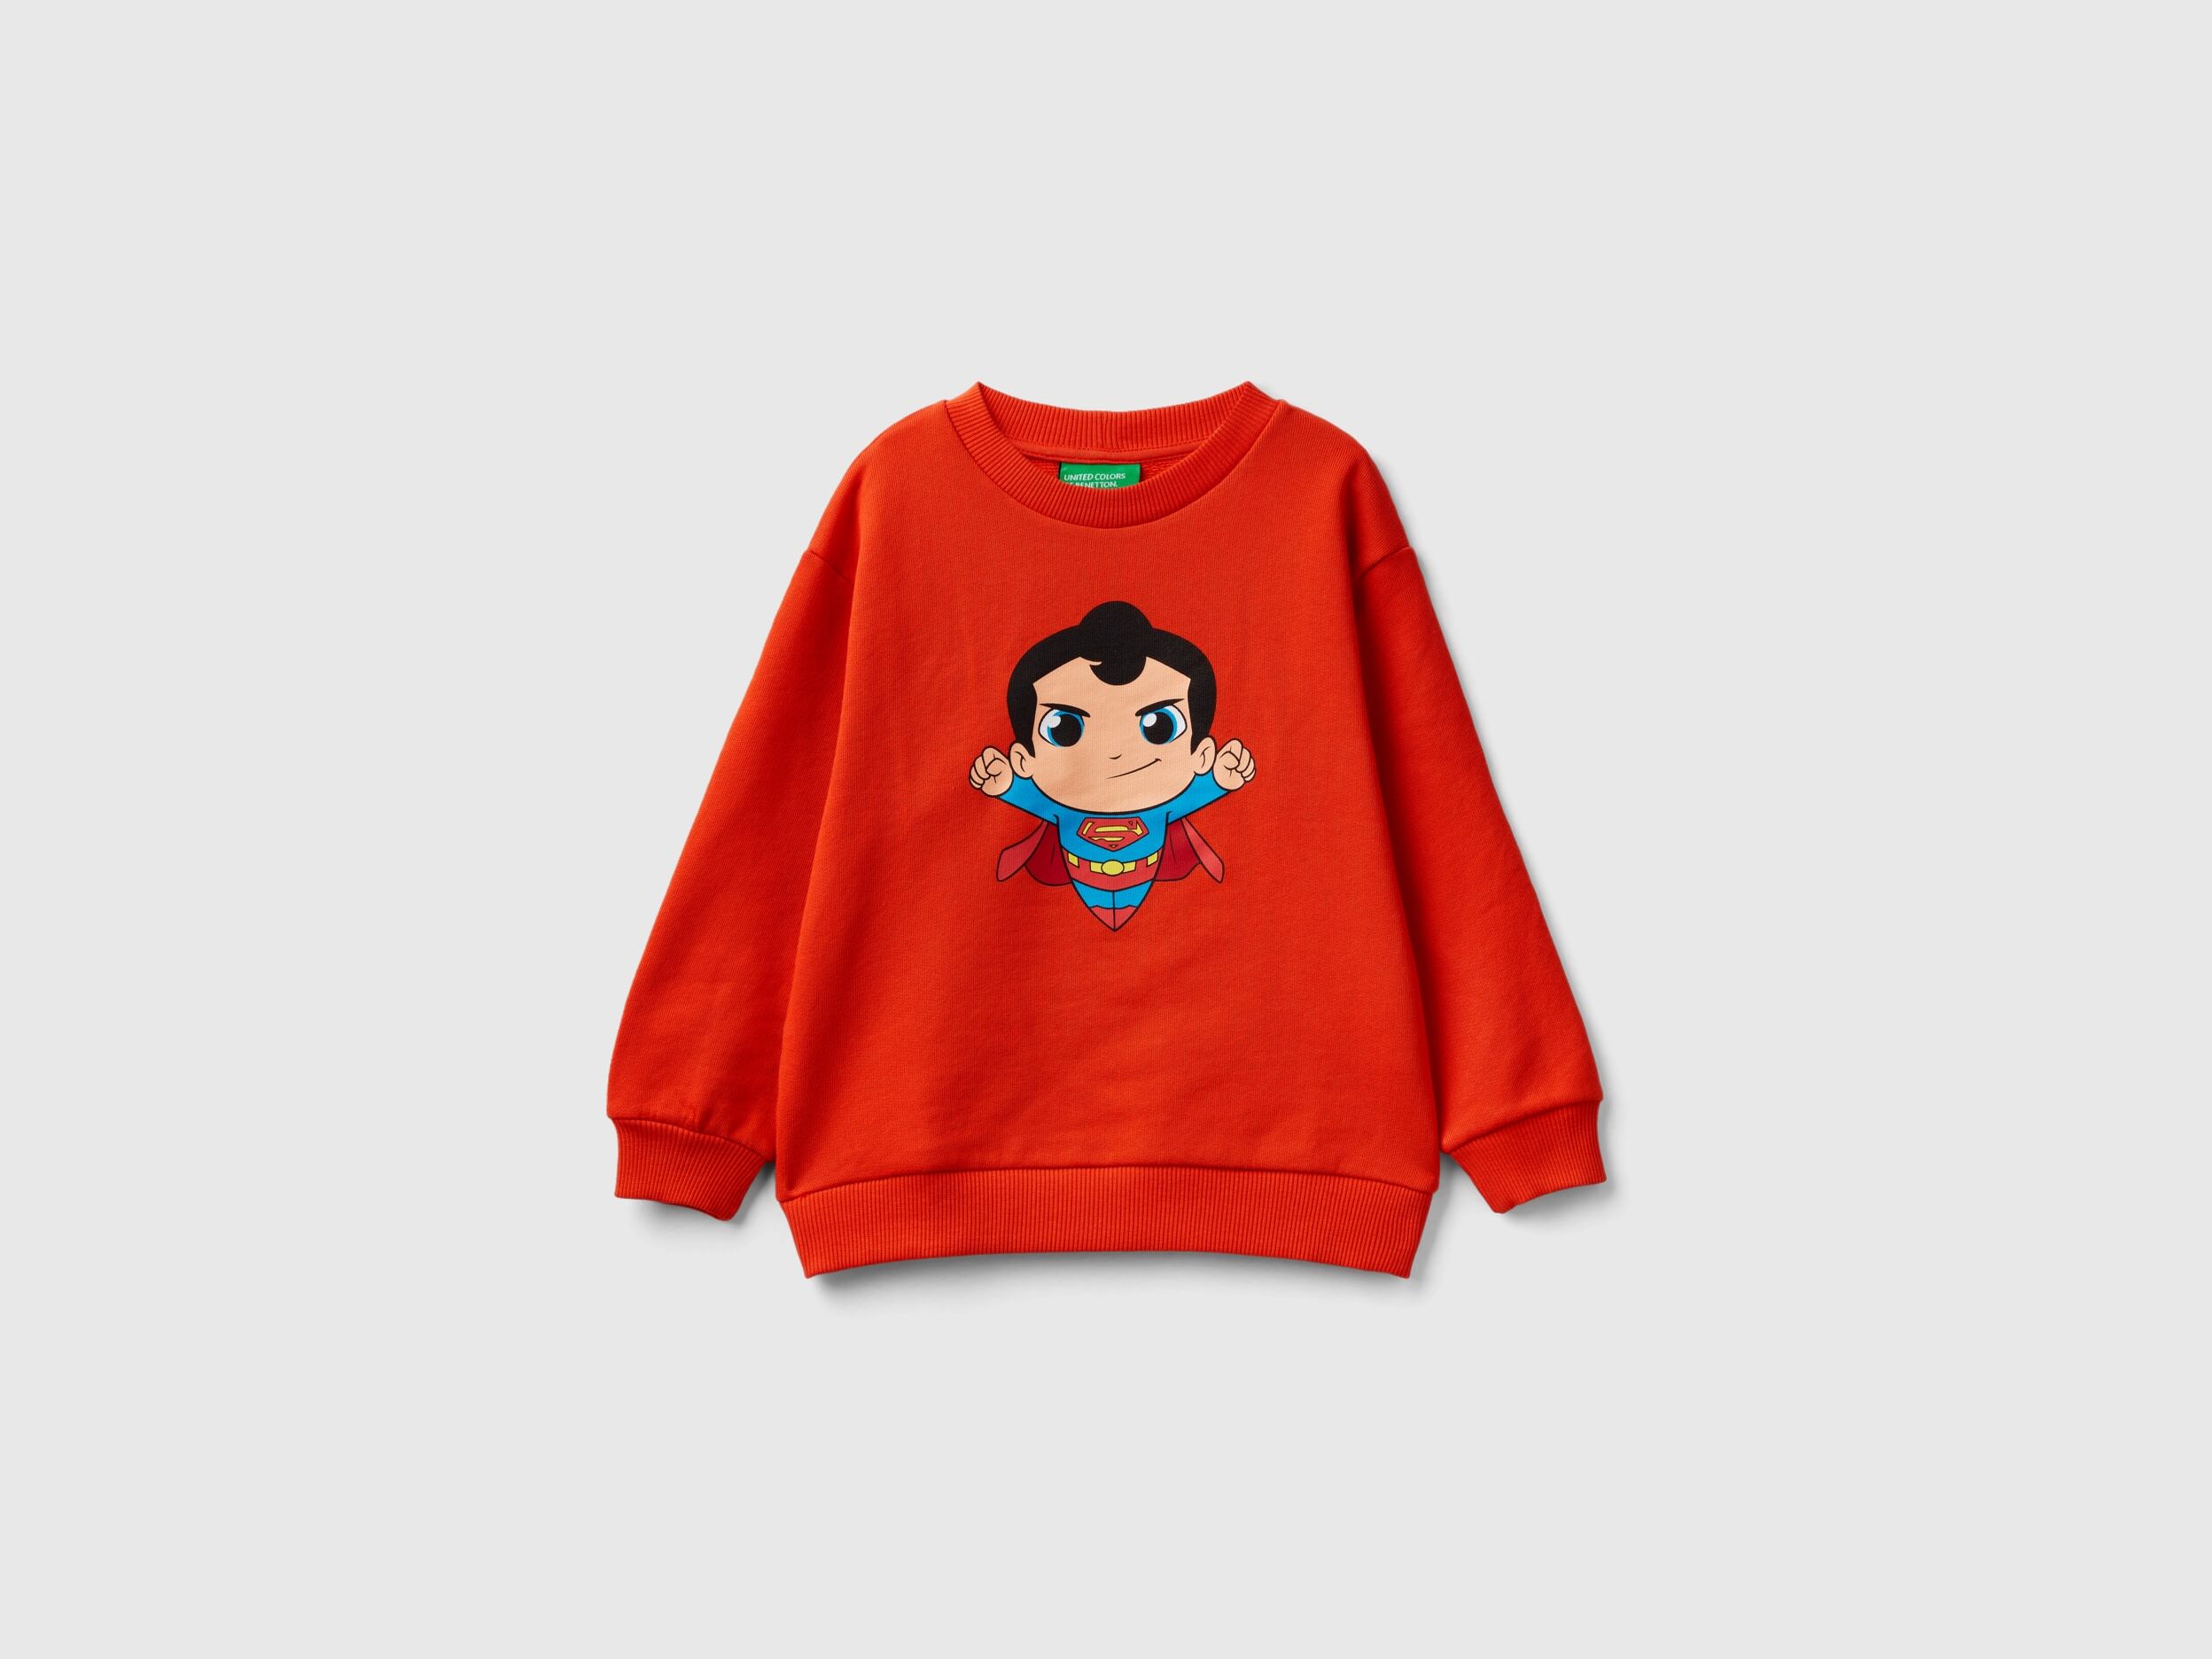 United Benetton, Red Superman ©&™ Dc Comics Sweatshirt, size 4-5, Red, Kids